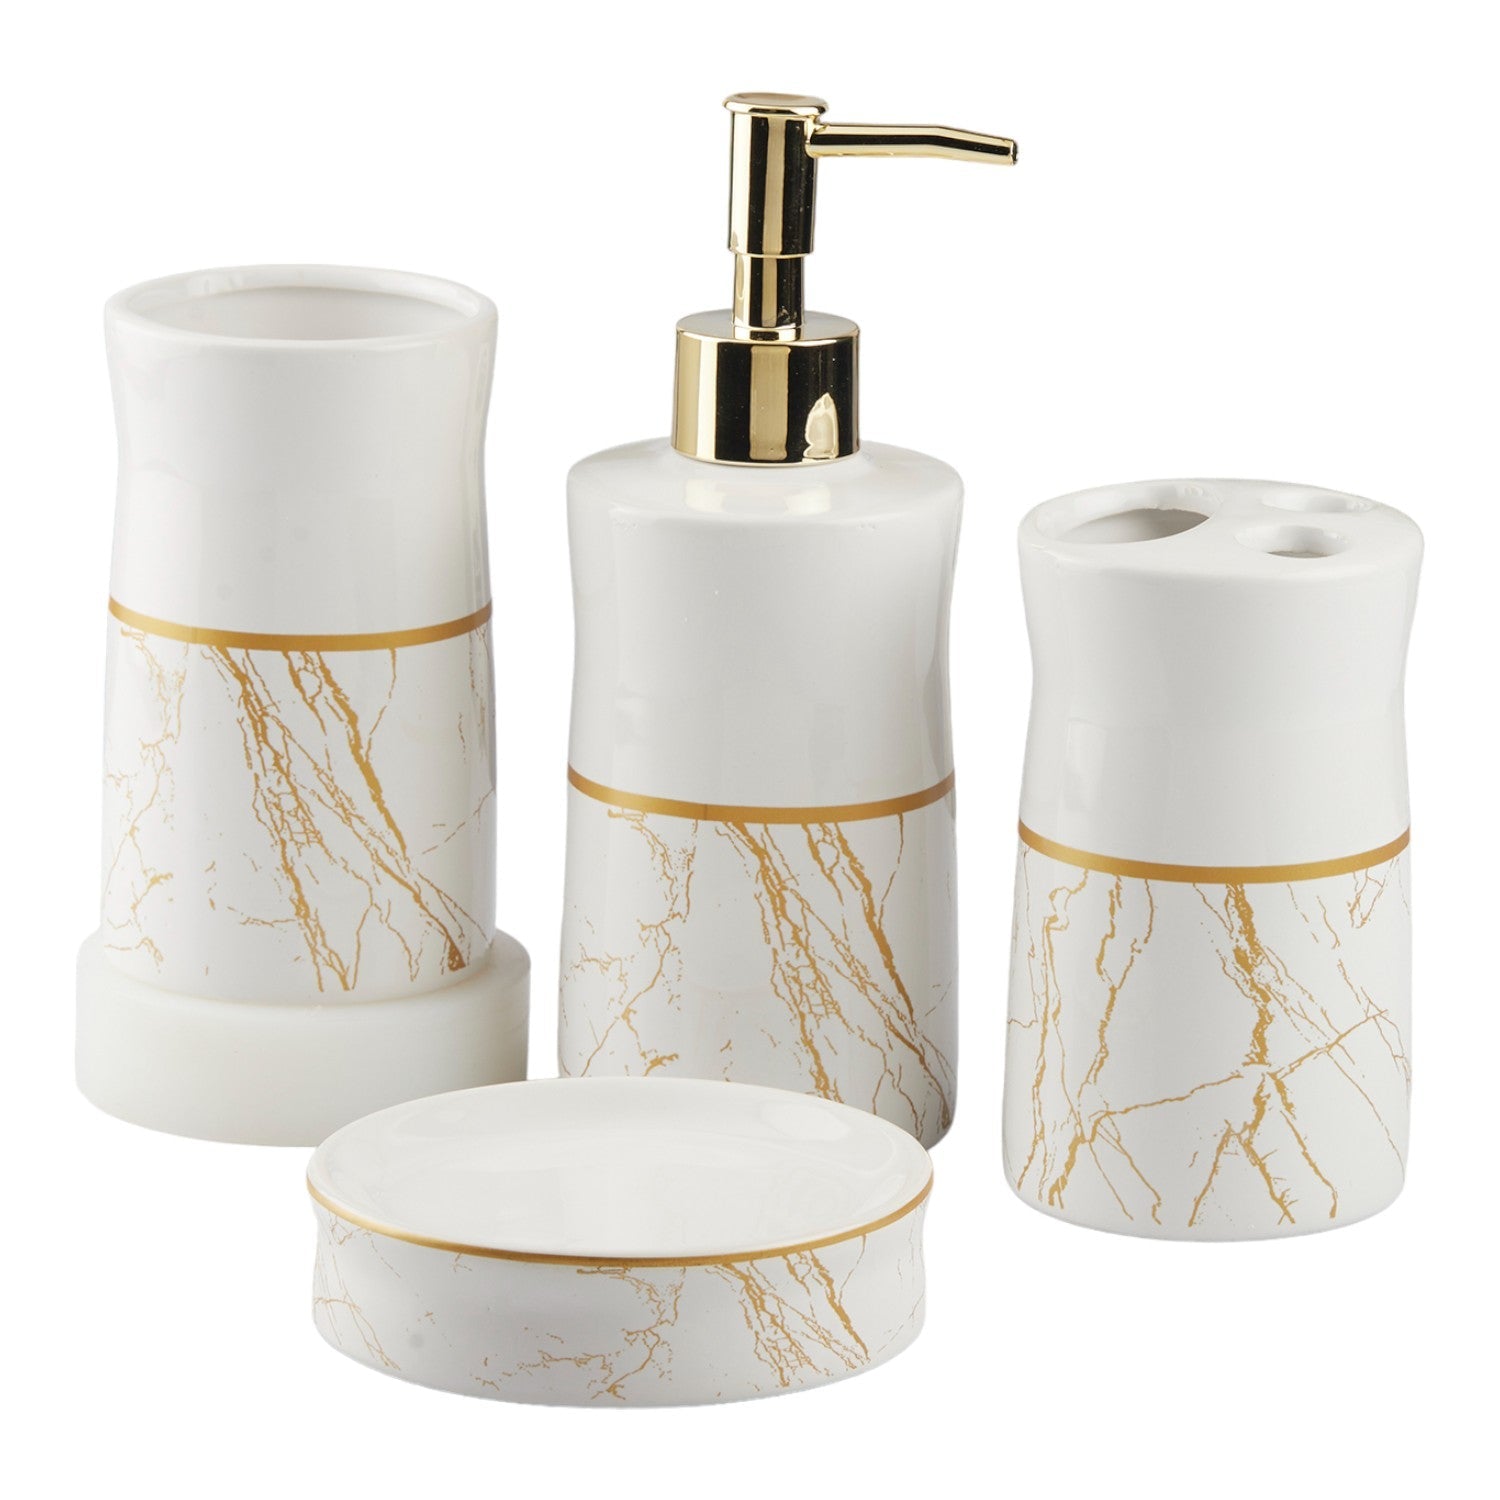 Ceramic Bathroom Set of 4 with Soap Dispenser (10476)